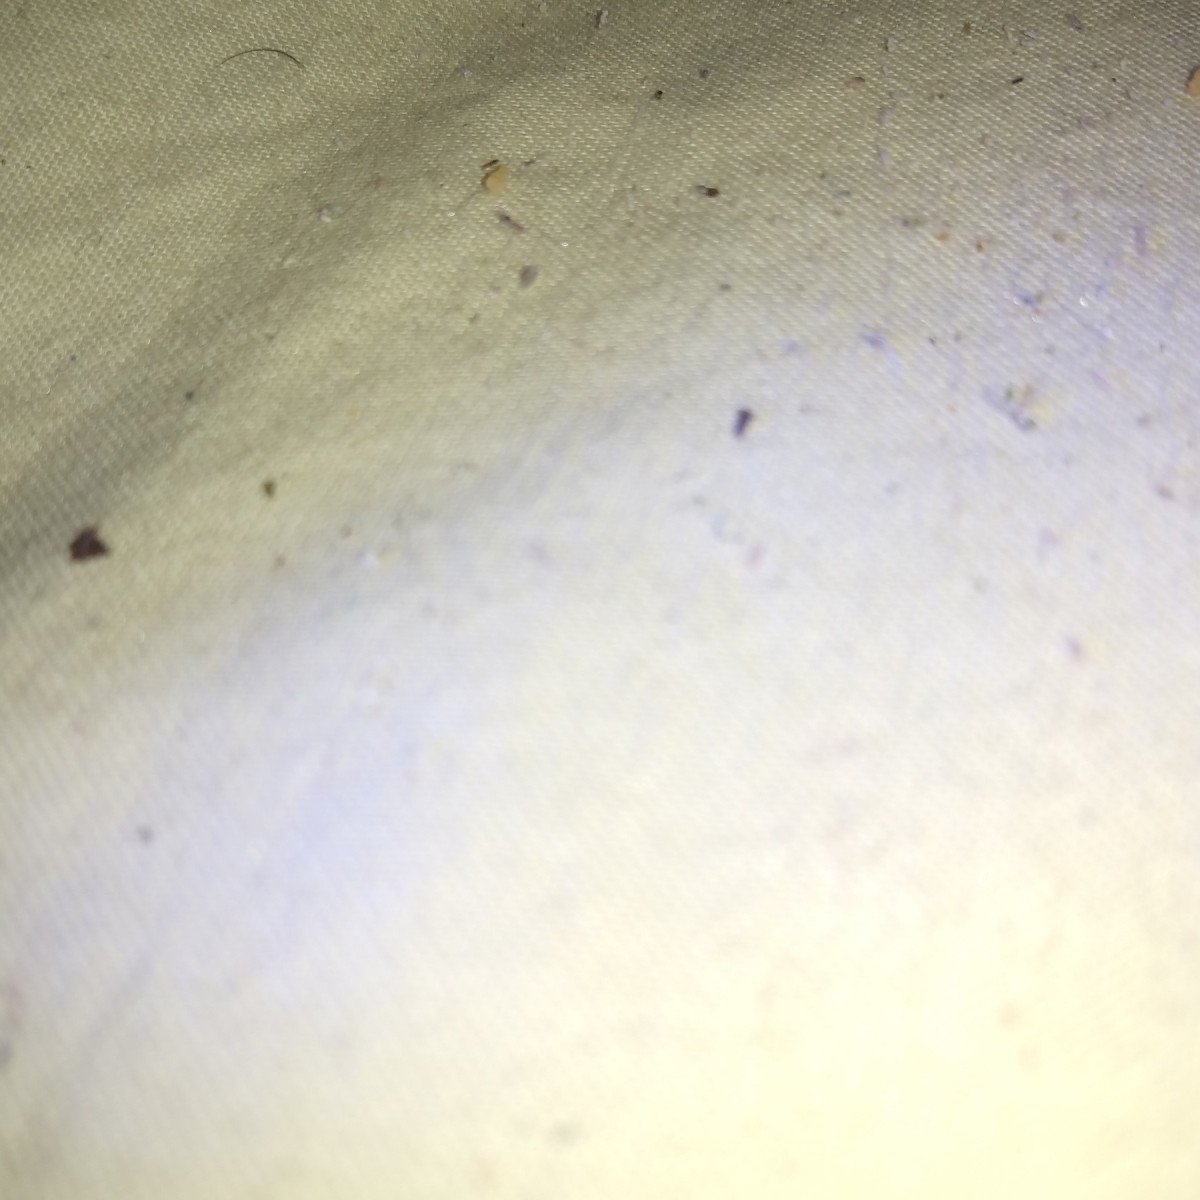 Identifying Little Black Bugs? | ThriftyFun